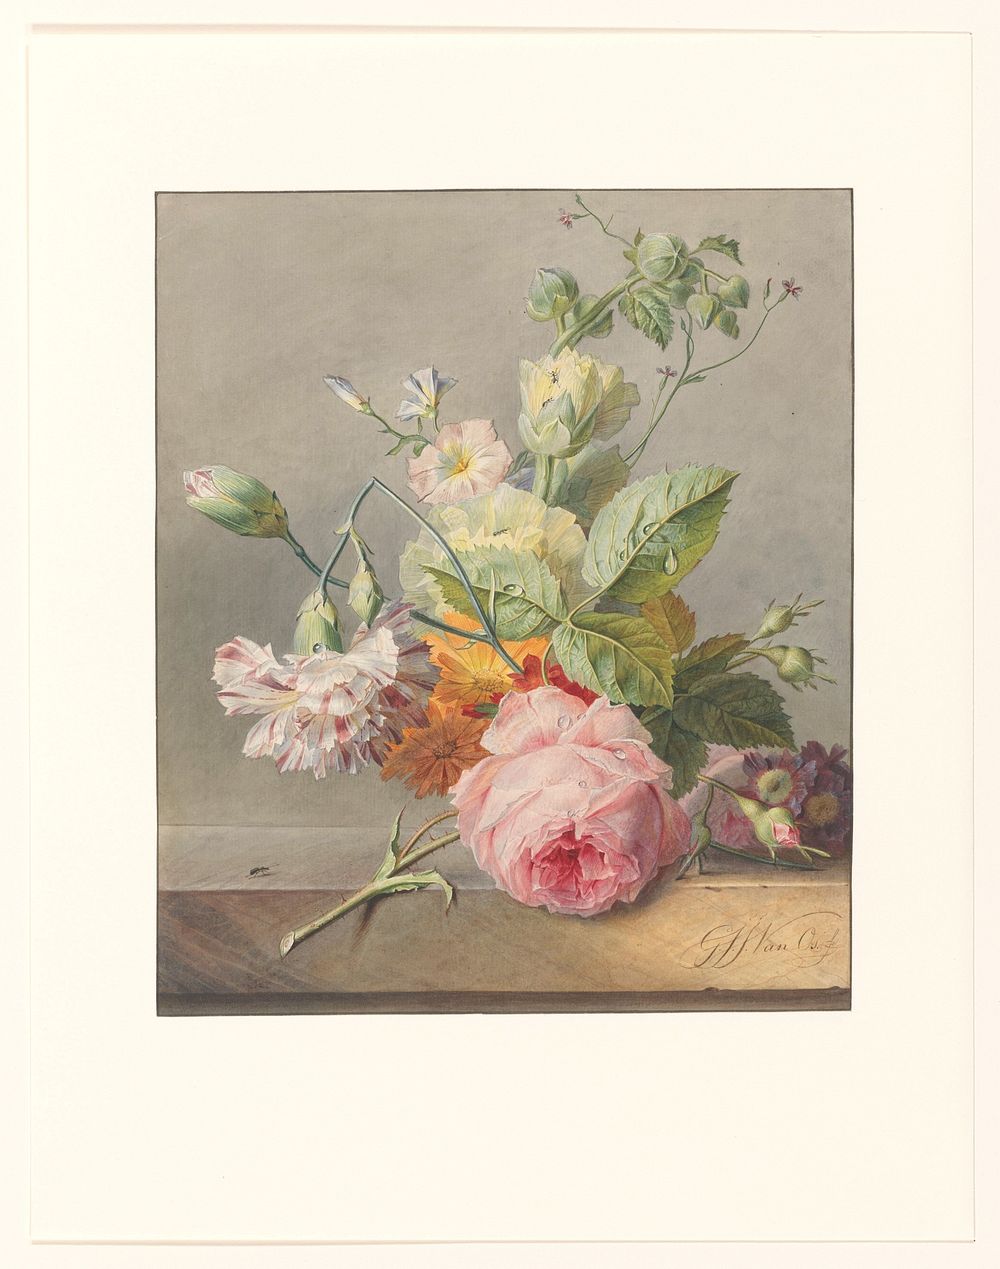 Floral Still Life (c. 1800 - c. 1825) by Georgius Jacobus Johannes van Os